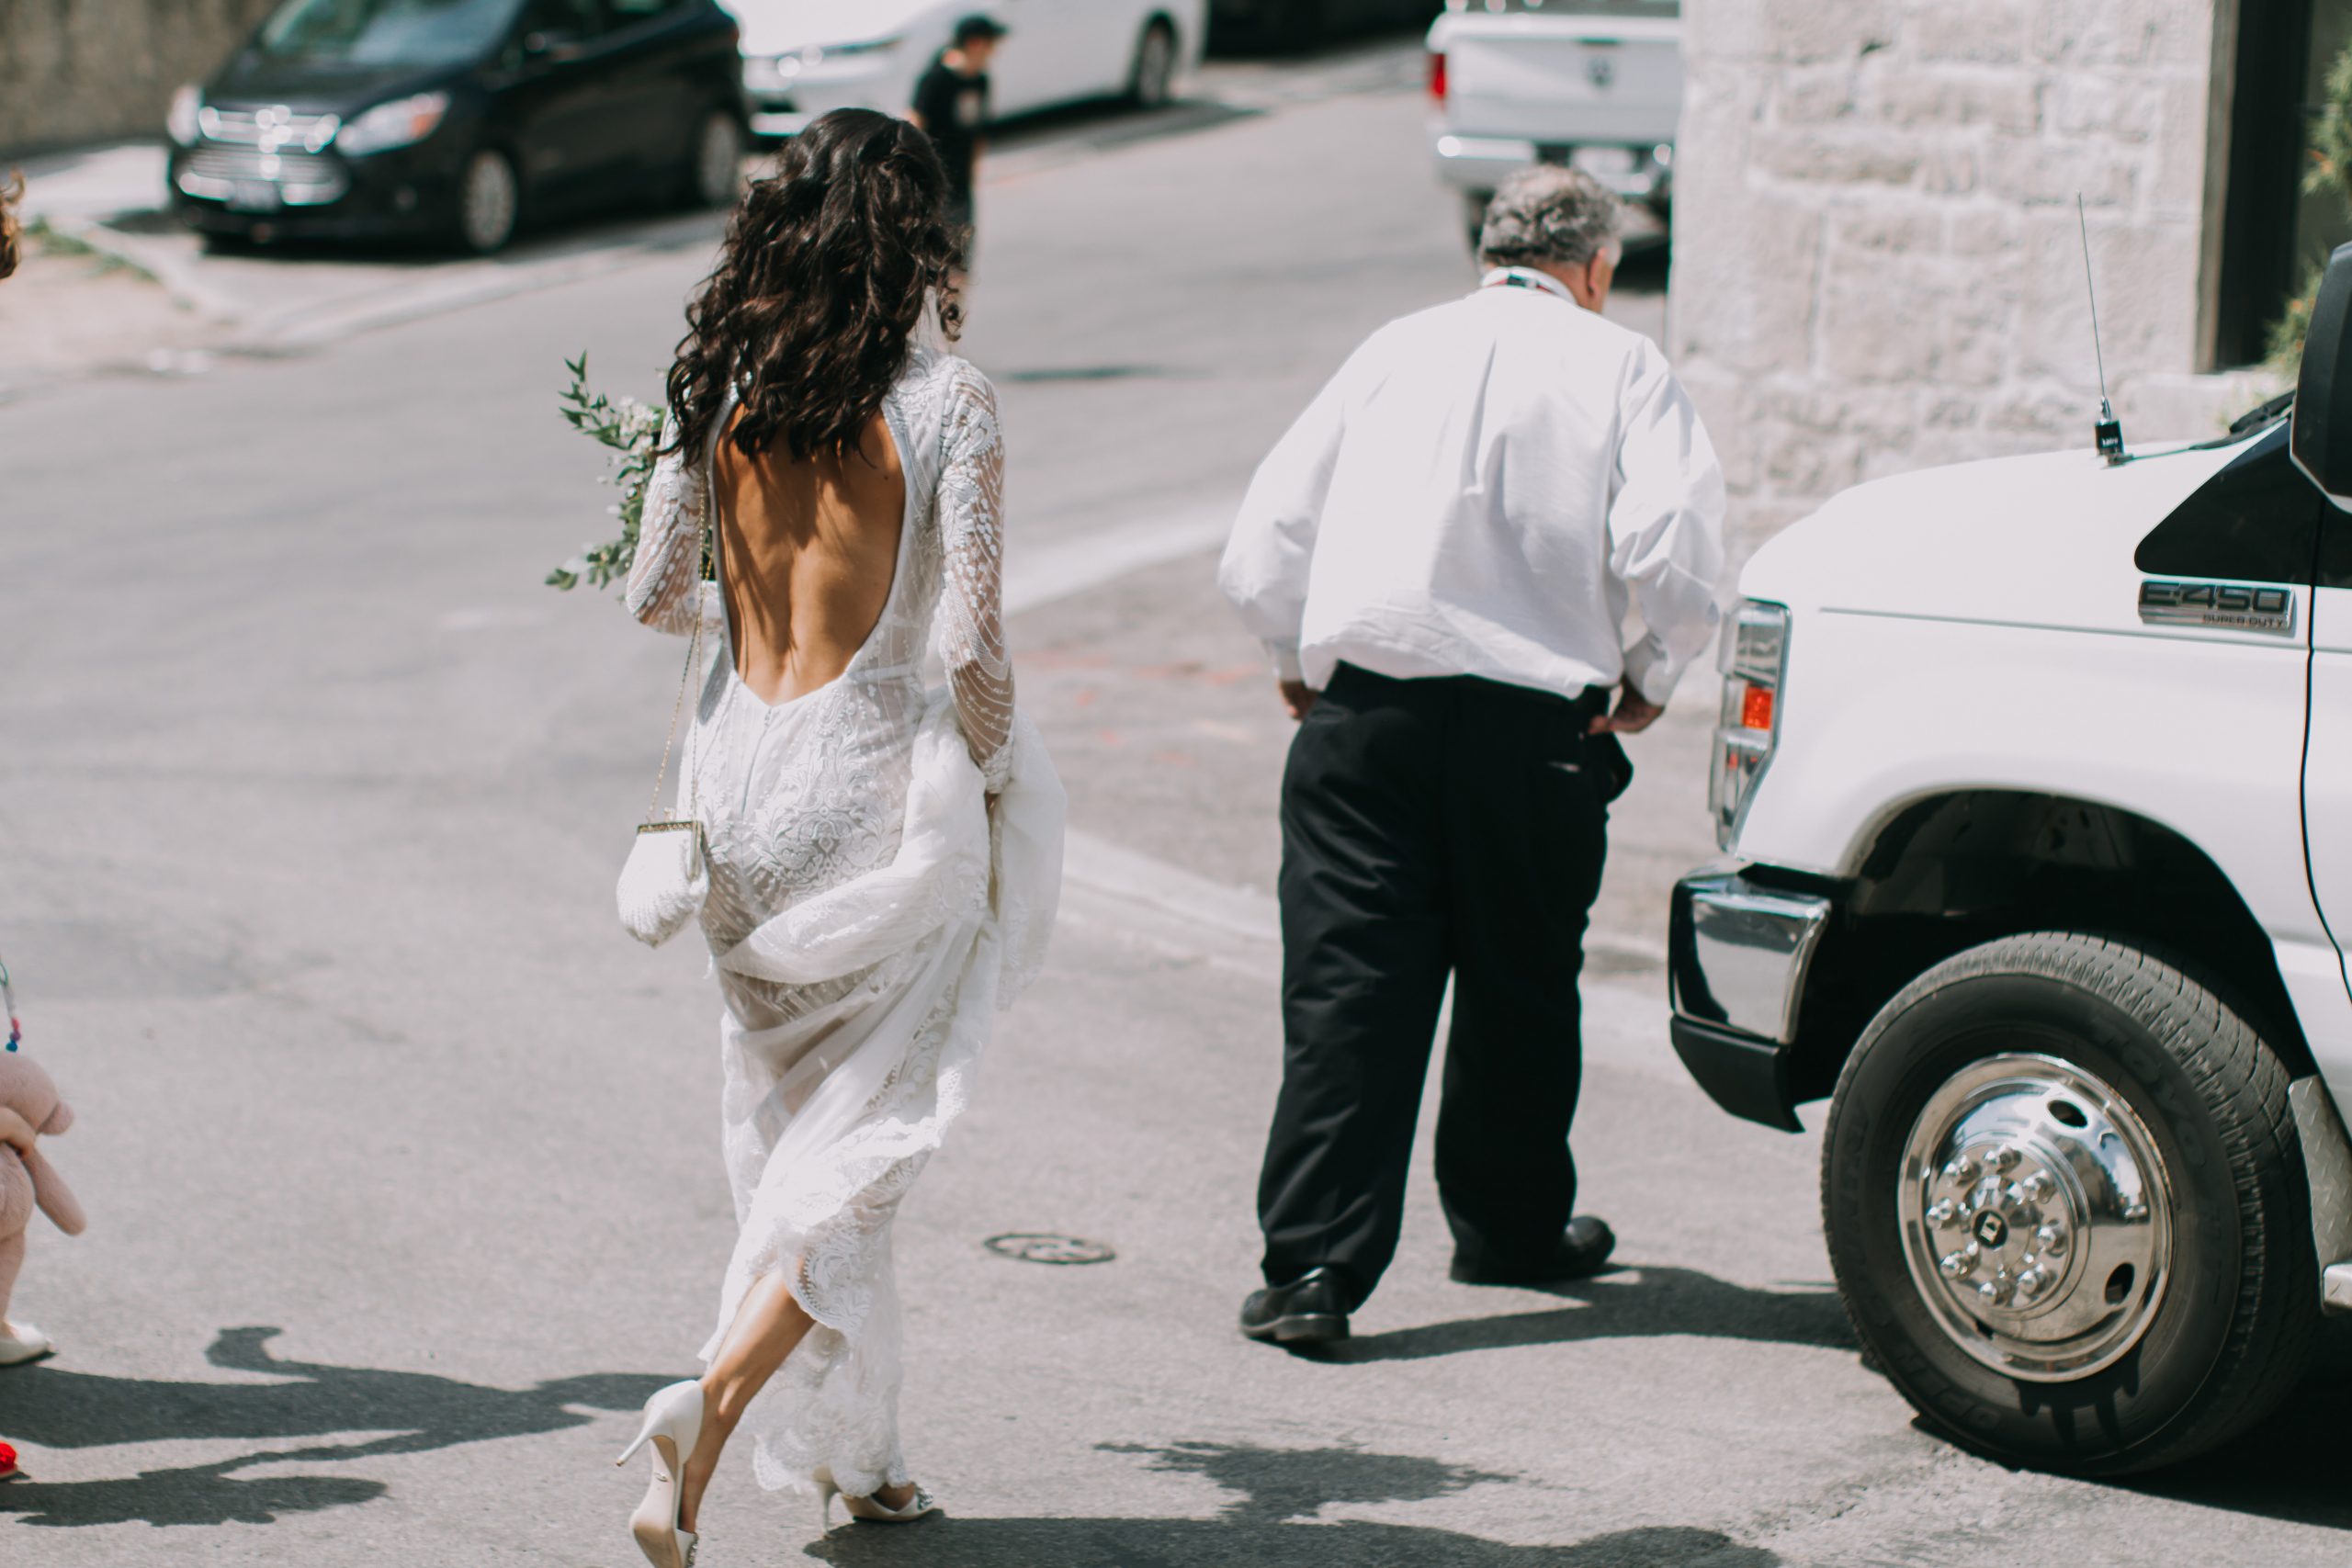 A woman in white dress walking down the street.